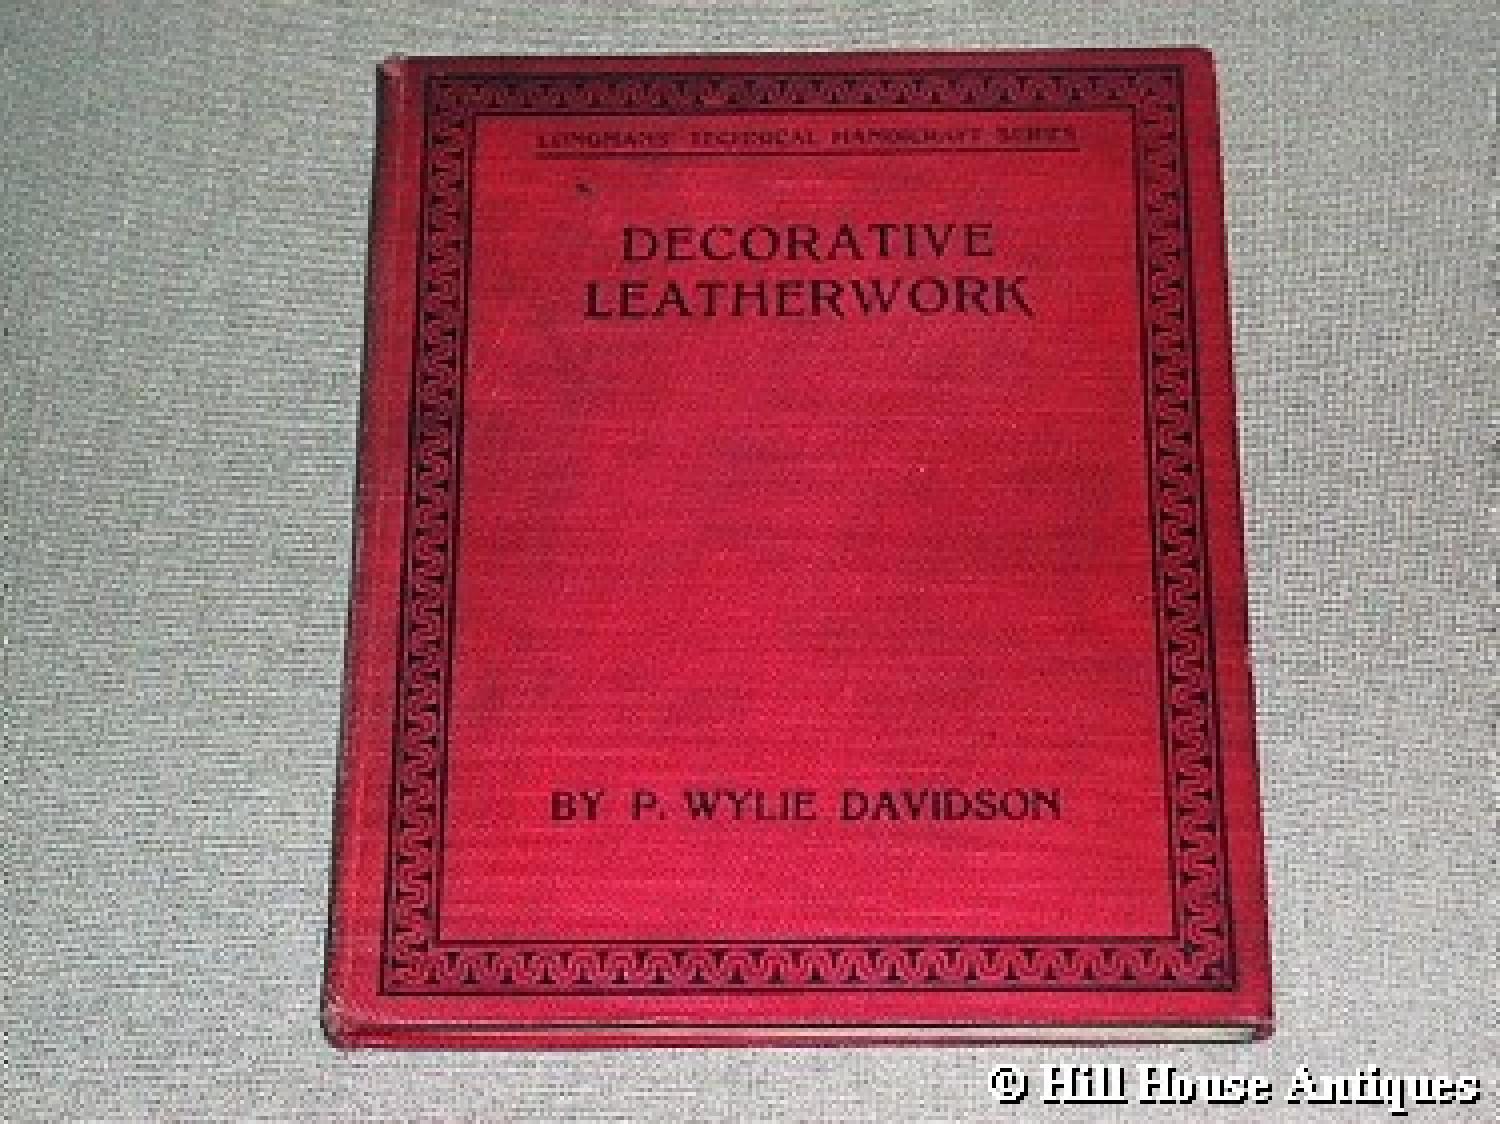 P Wylie Davidson leatherwork book